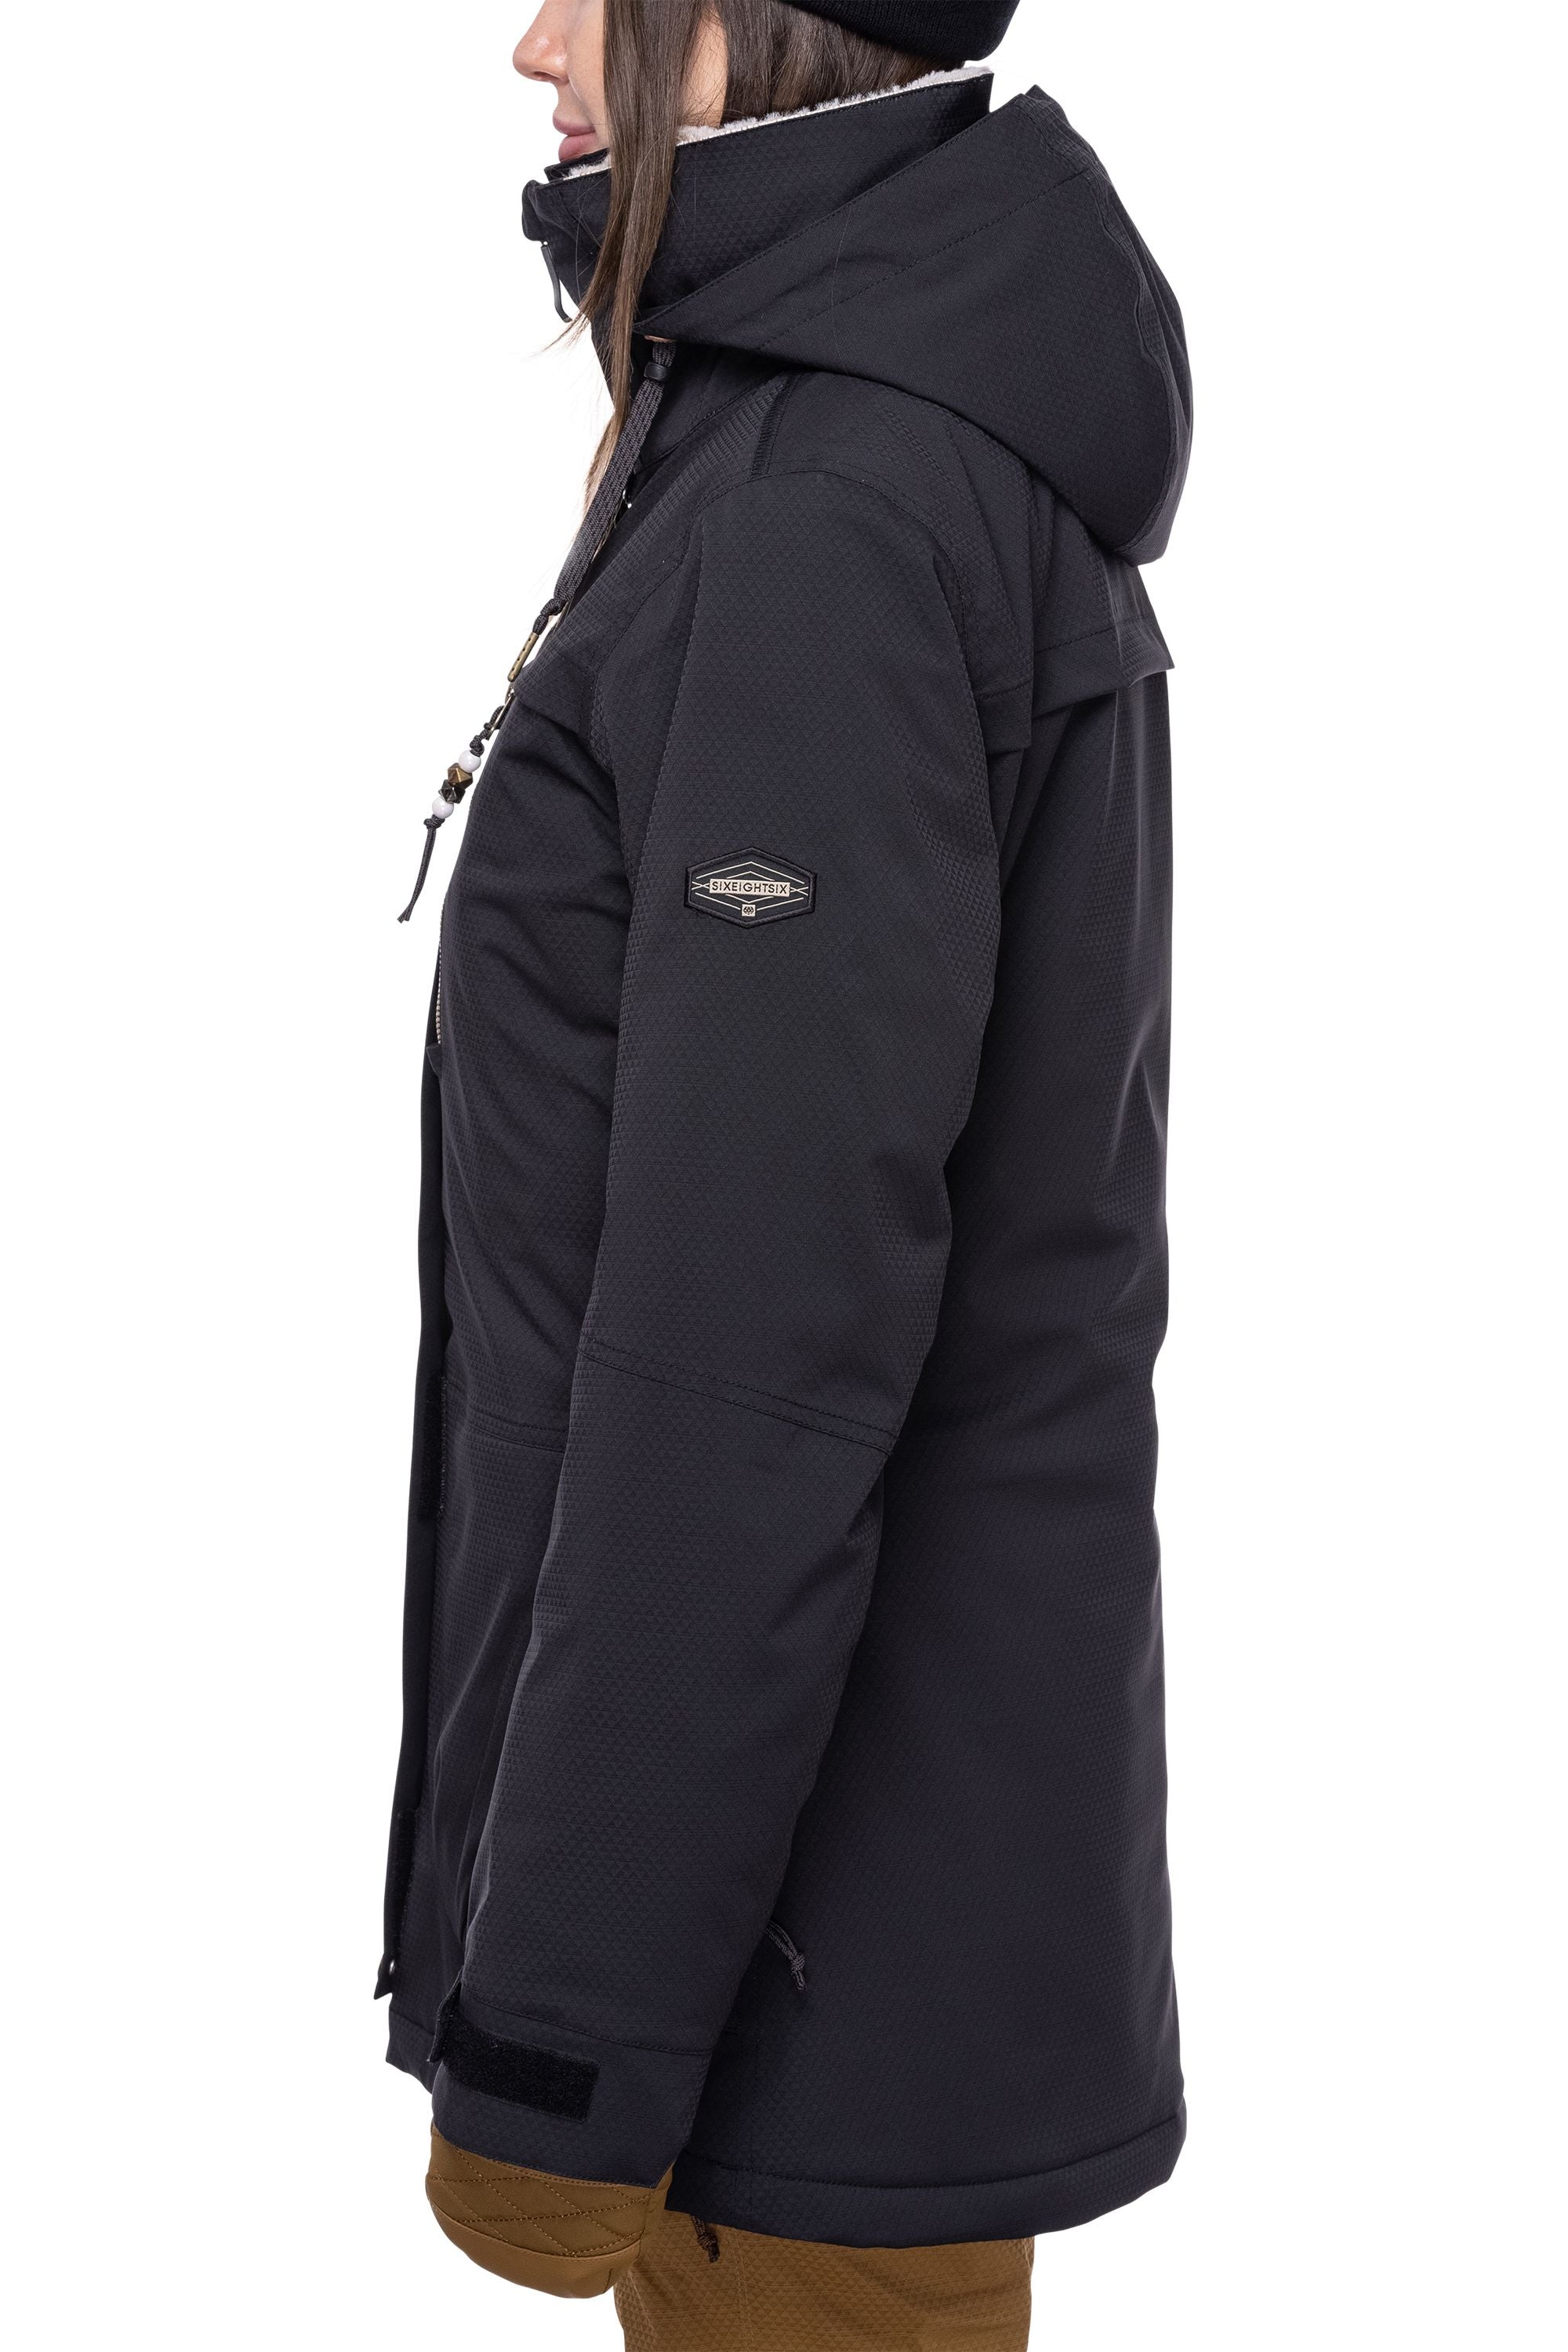 686 Women's Spirit Insulated Snowboard Jacket Black Geo Jacquard 2023 Women's Snow Jackets 686 